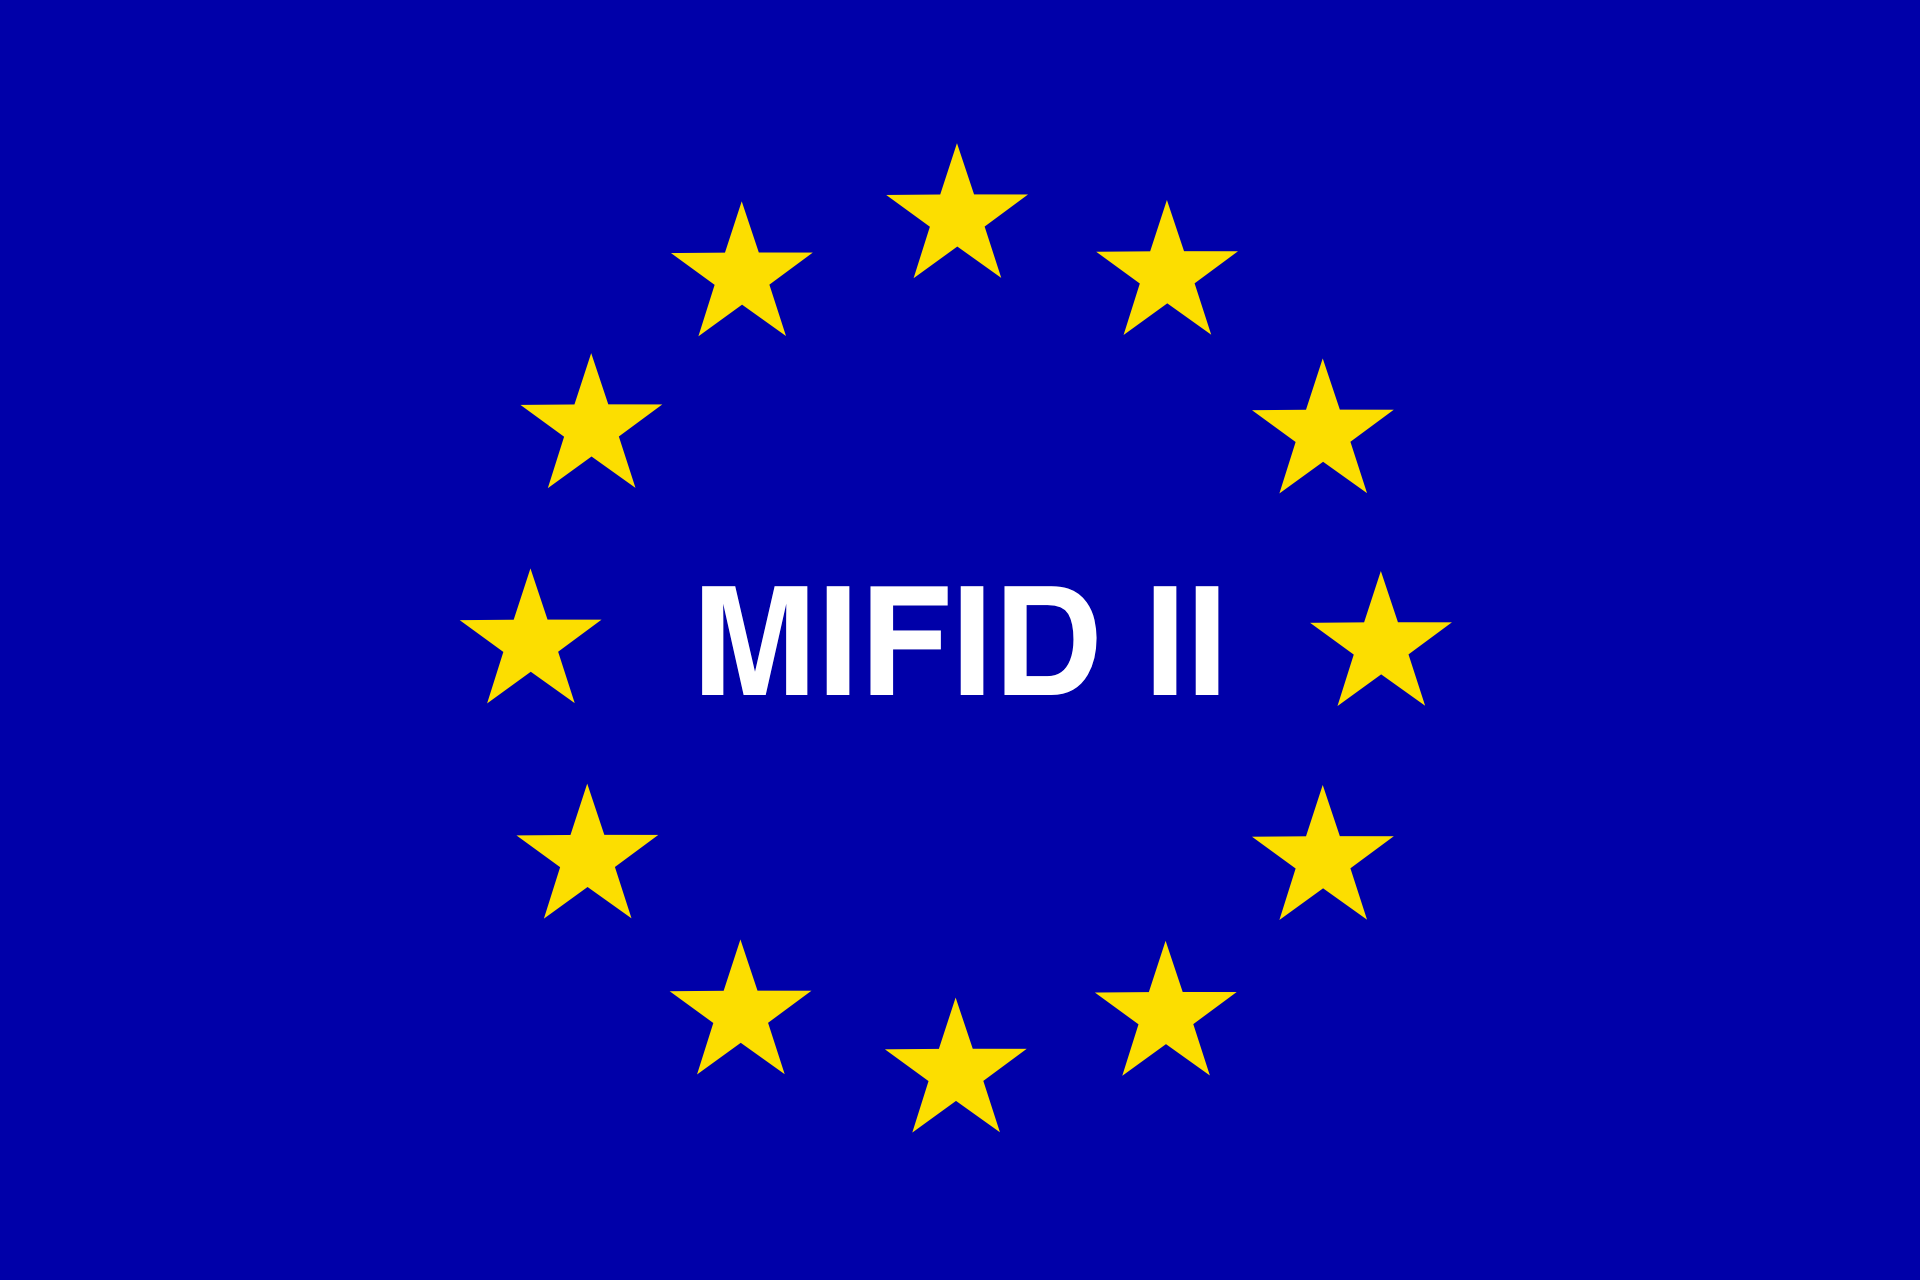 eu flag bright blue_Mifid 2